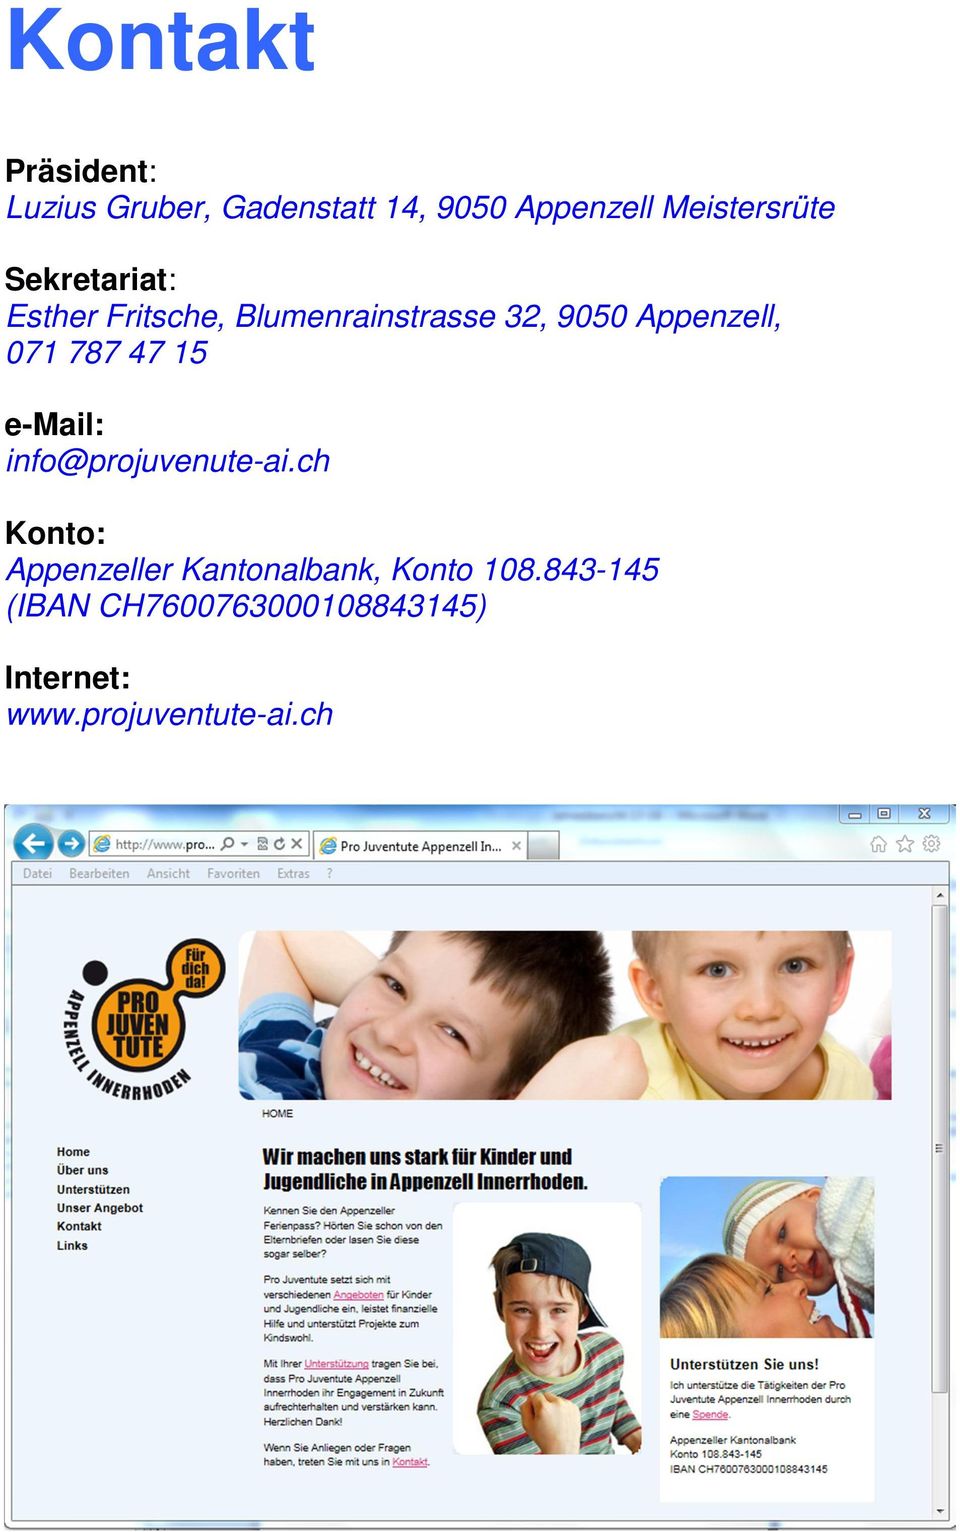 Appenzell, 071 787 47 15 e-mail: info@projuvenute-ai.